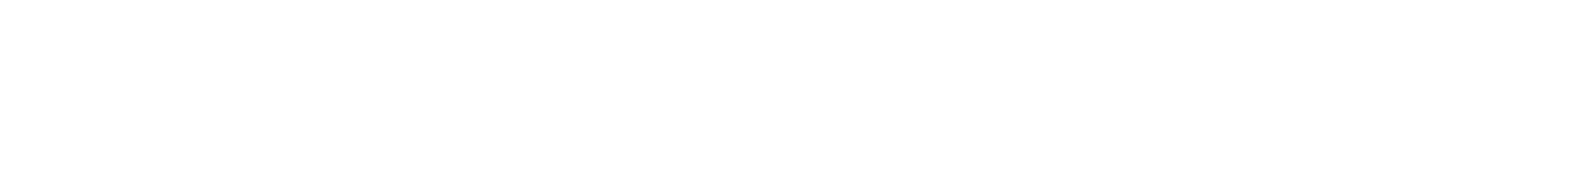 Gerresheimer logo grand pour les fonds sombres (PNG transparent)